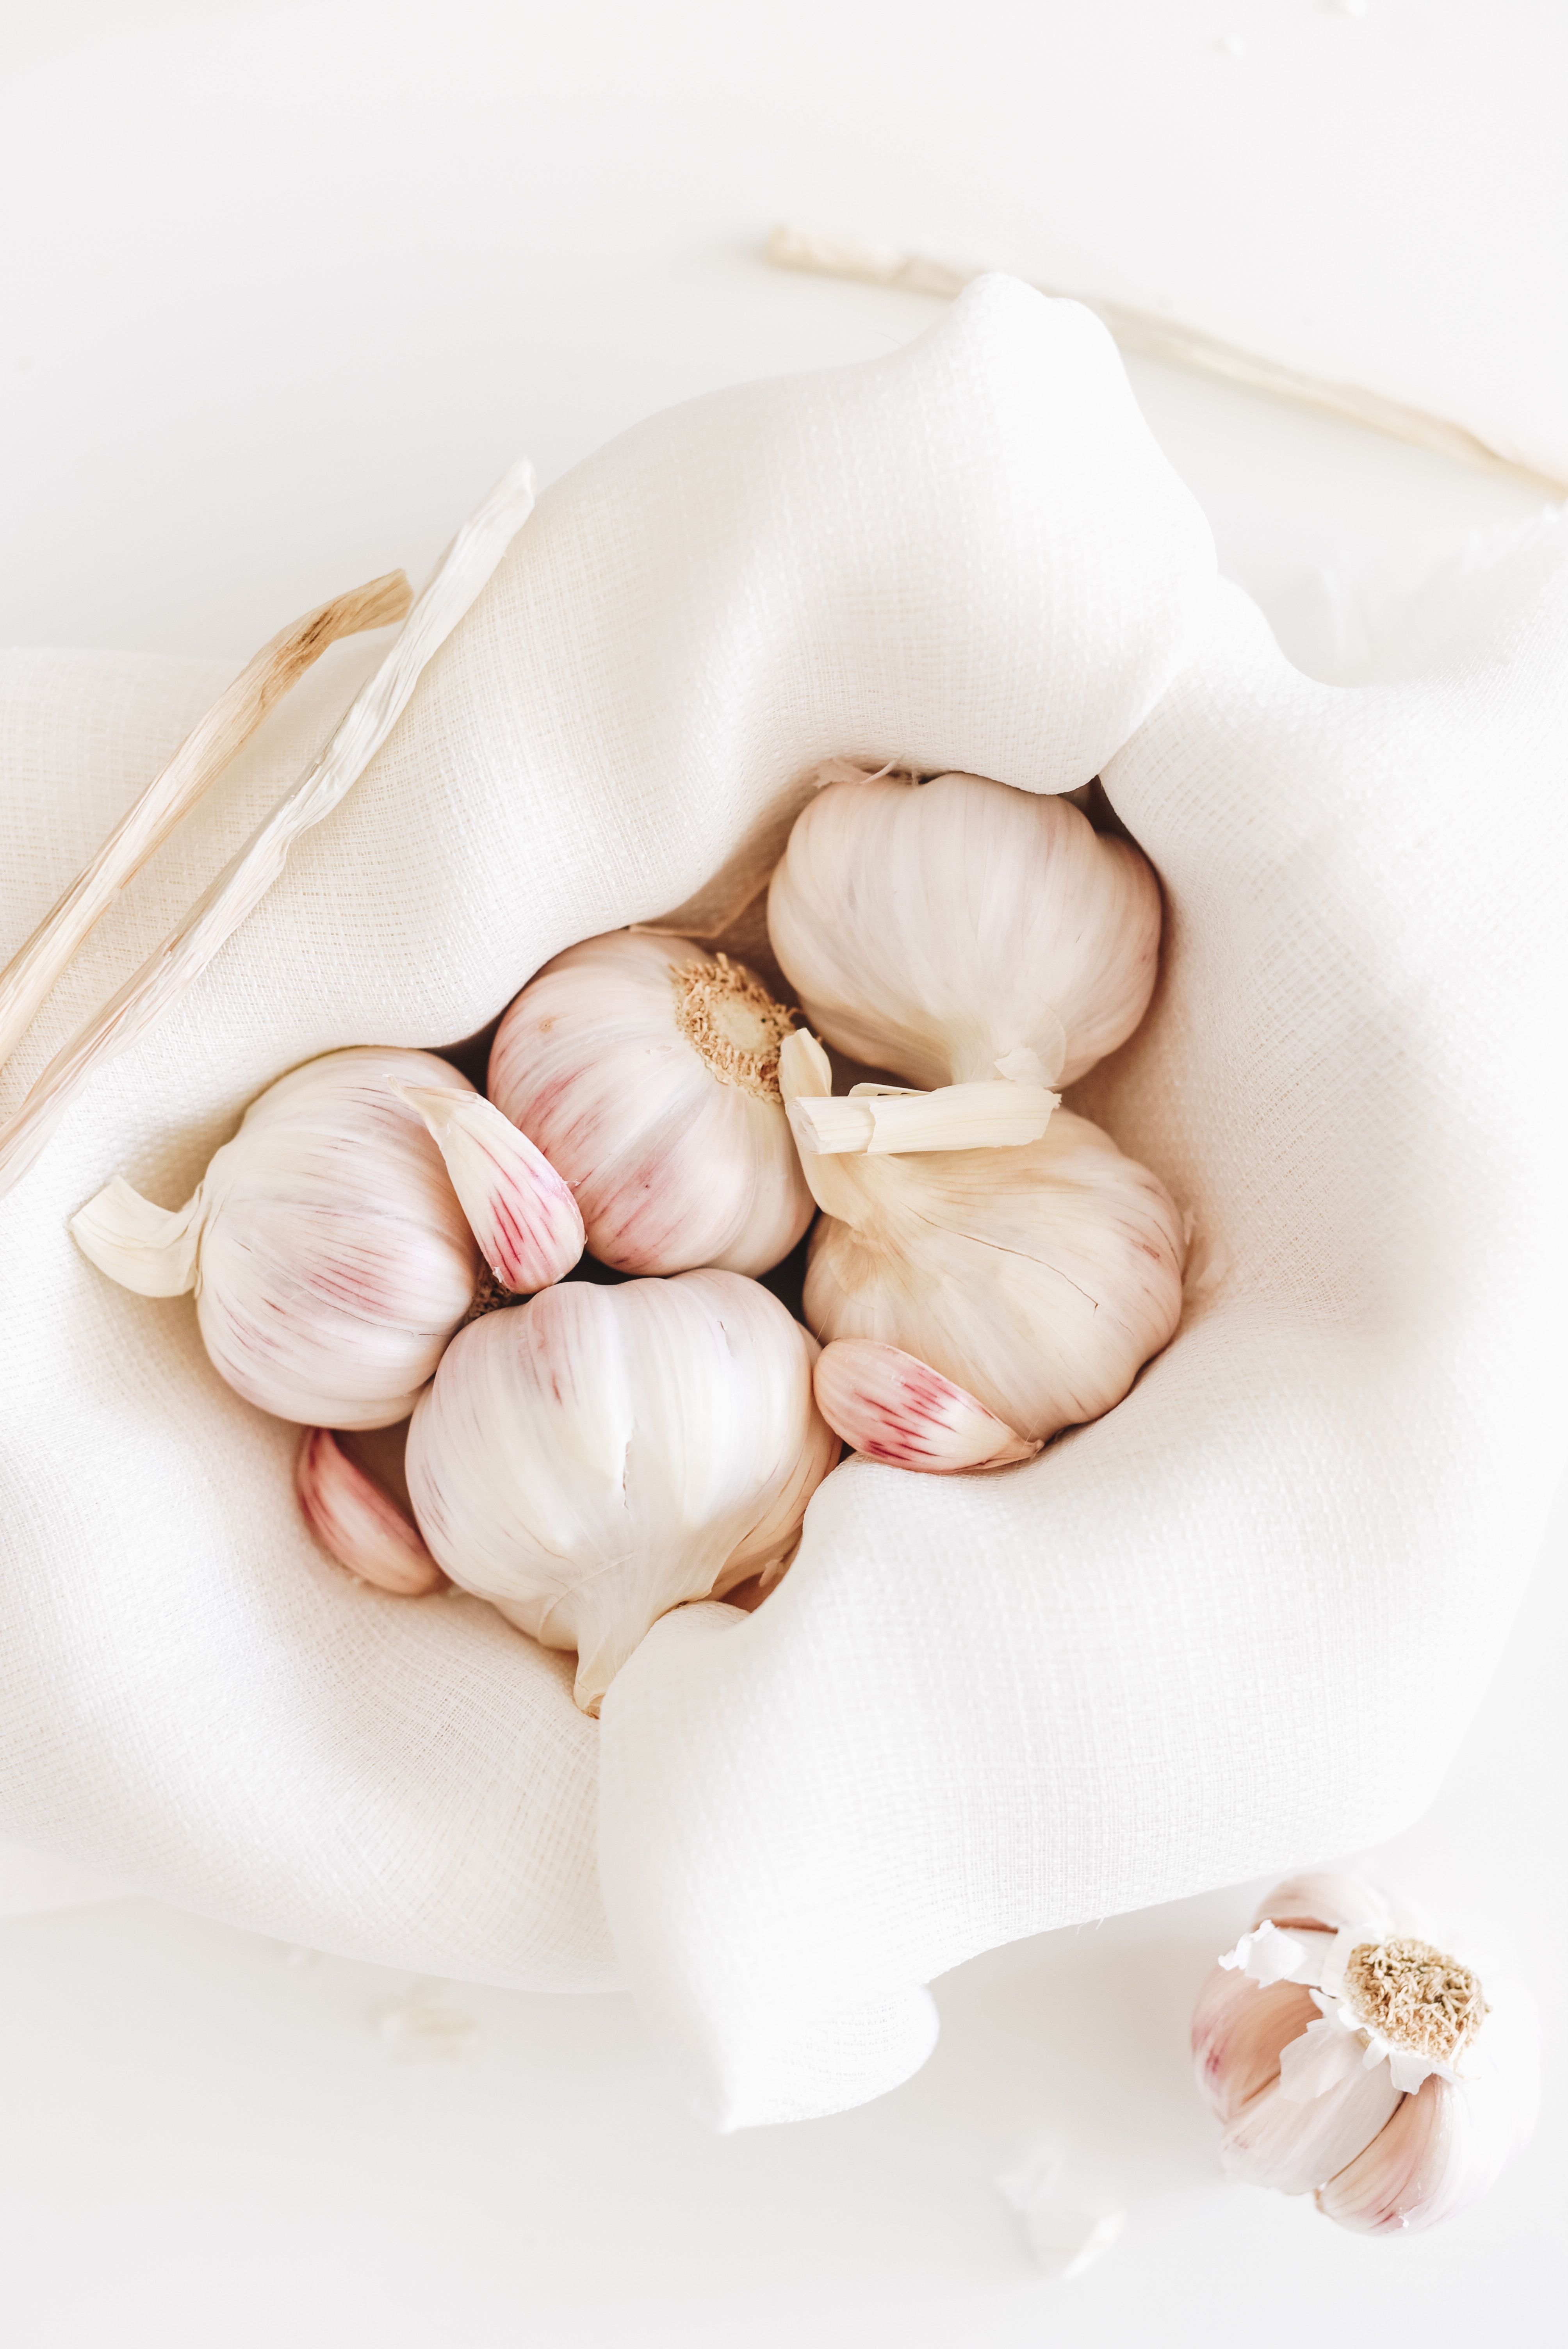 garlic| detox diet| healthy living|essence of food